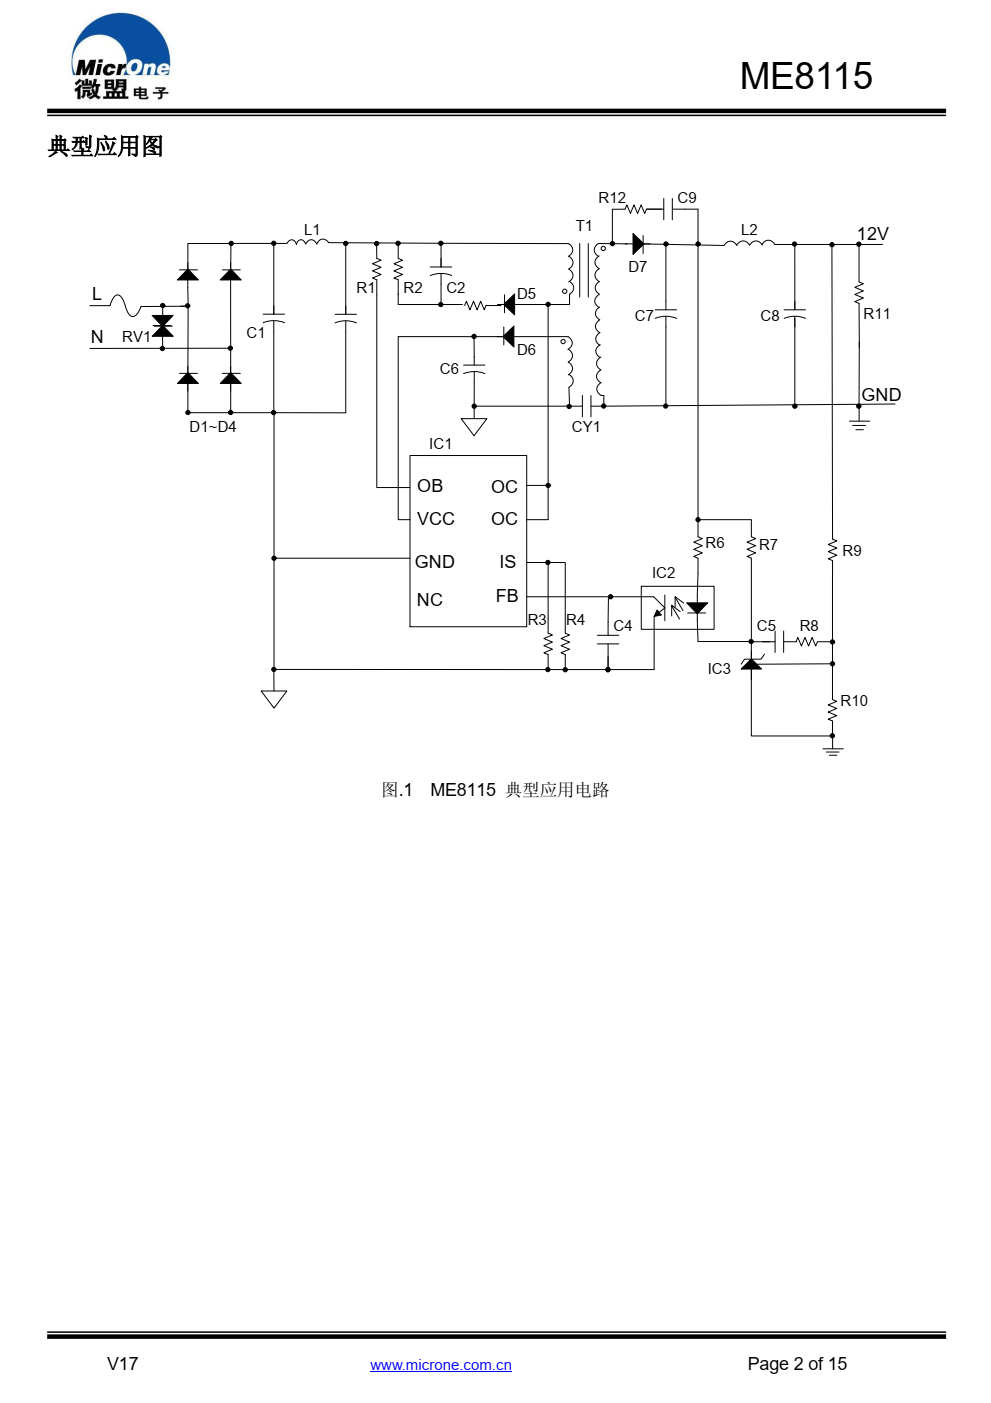 ME8115高性能电流模式PWM控制器， 专为高性价比AC/DC 转换器设计